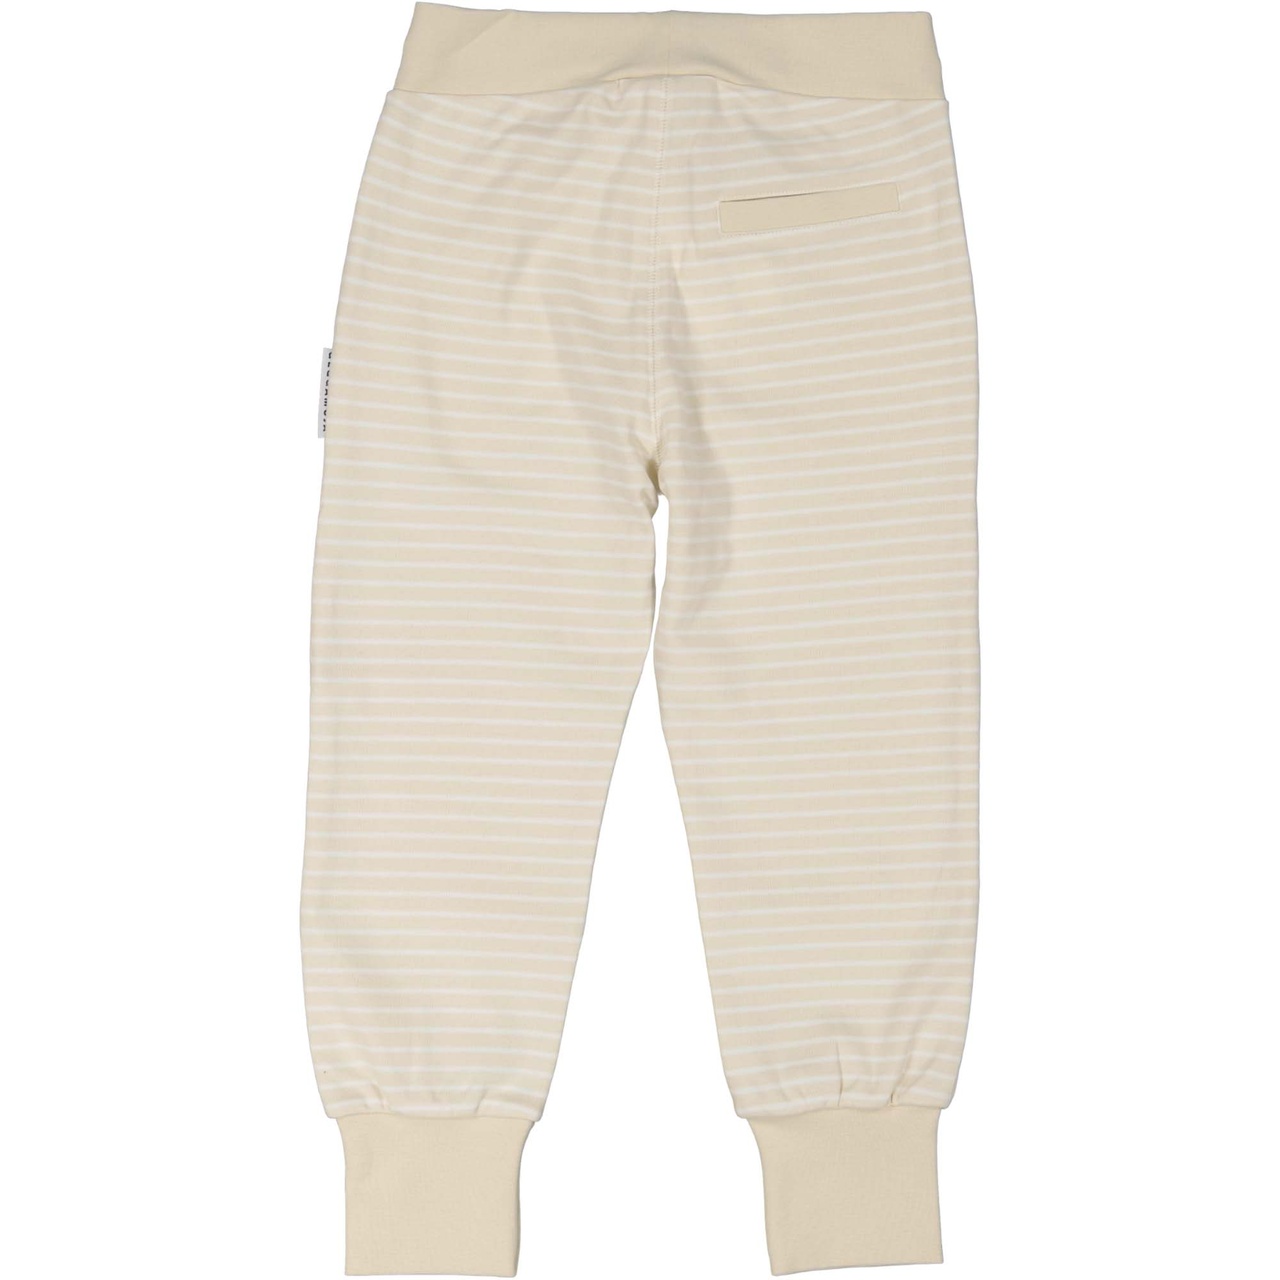 Long pants Beige/white 146/152